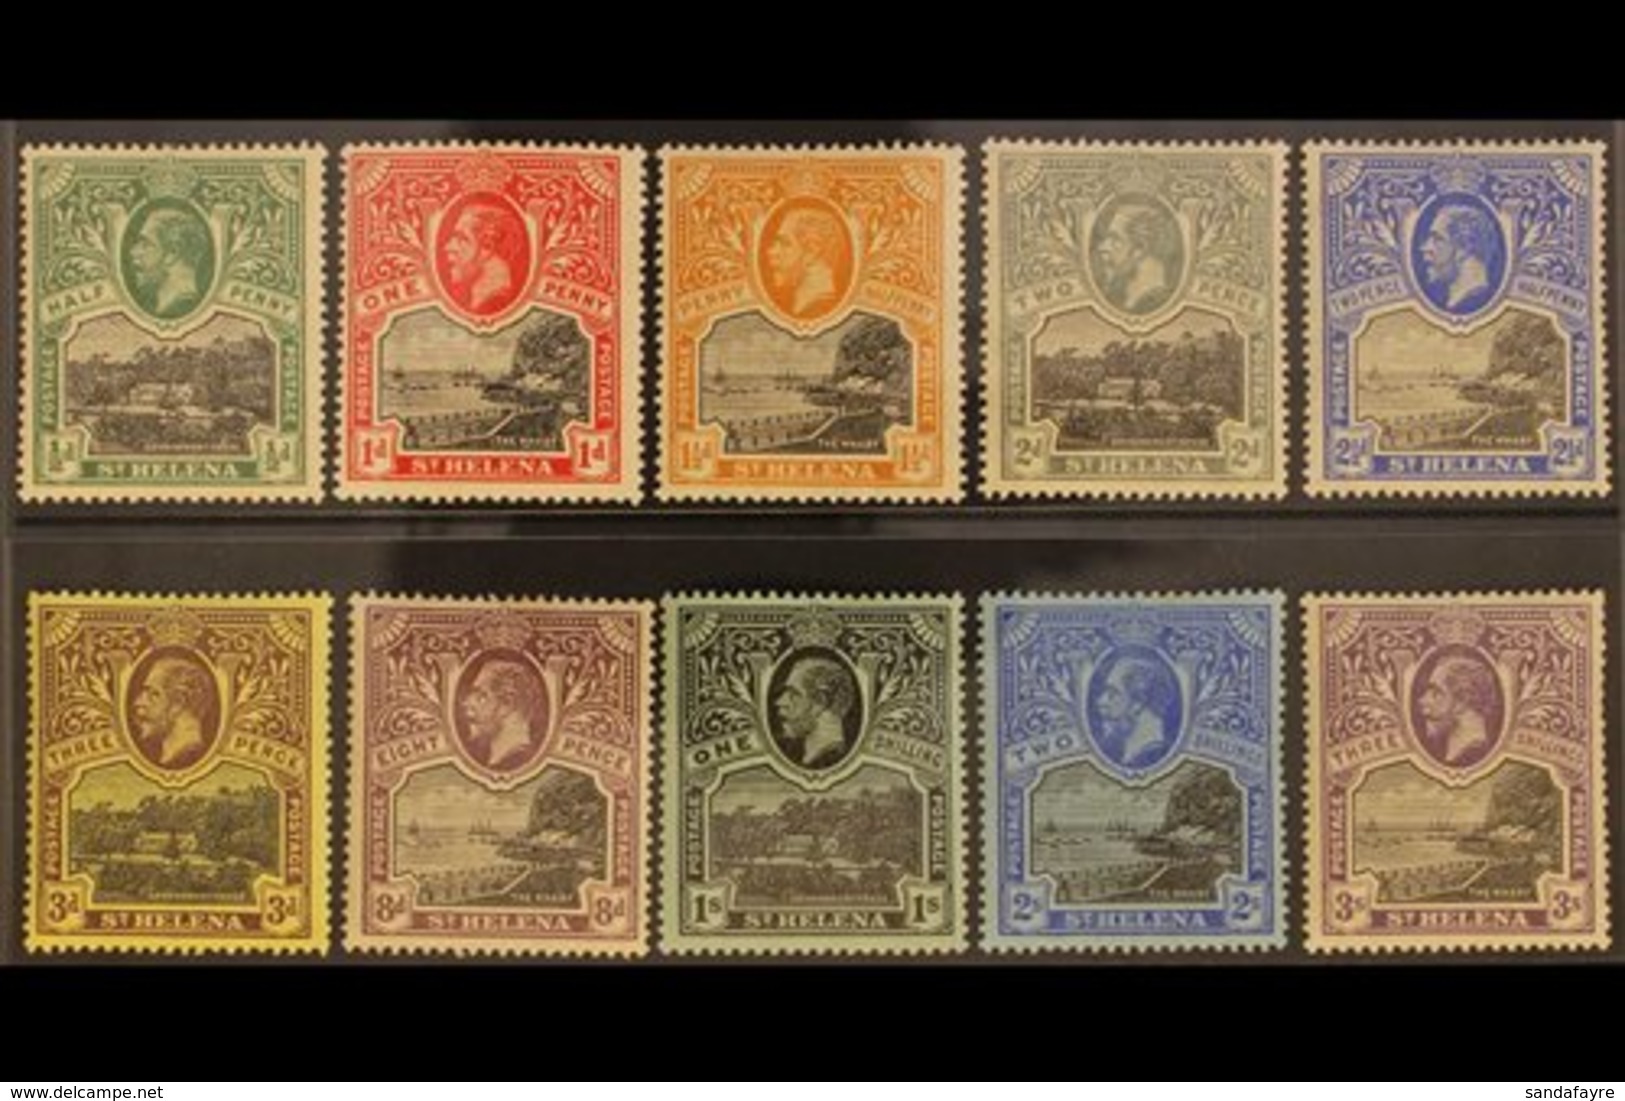 1912-16 Definitives Complete Set, SG 72/81, Very Fine Mint. Fresh And Attractive! (10 Stamps) For More Images, Please Vi - Sainte-Hélène